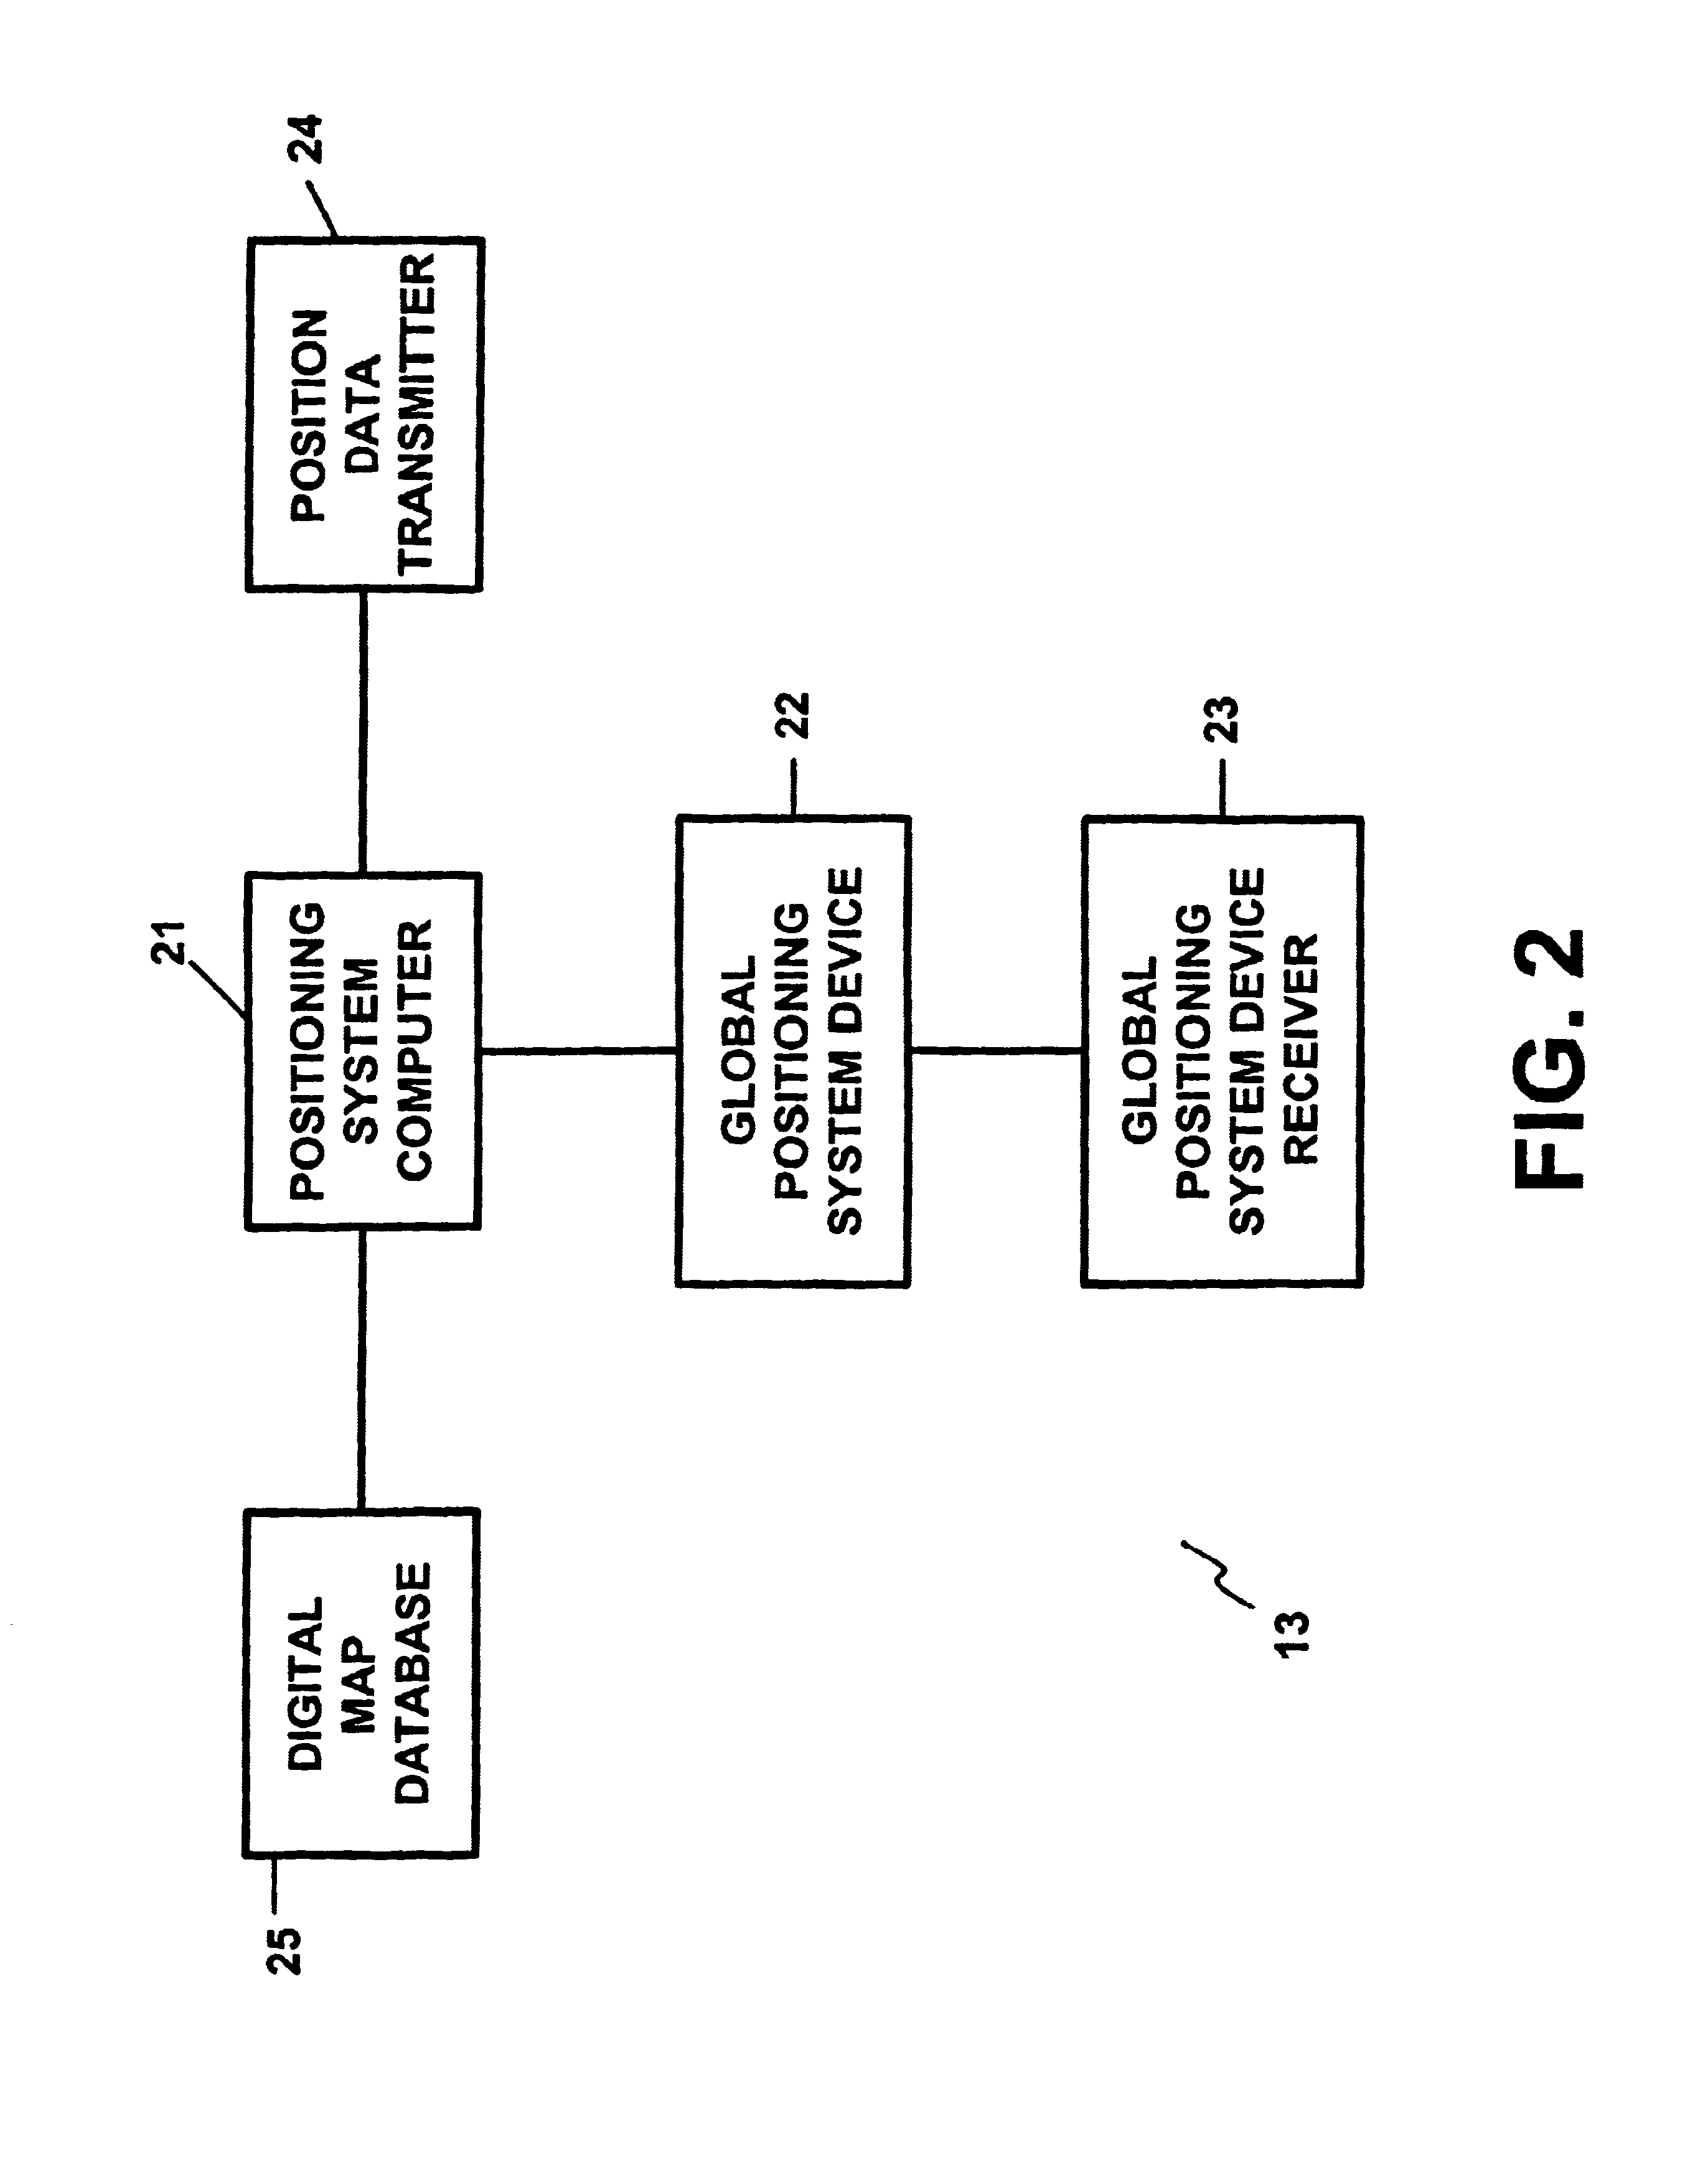 Monitoring apparatus and method